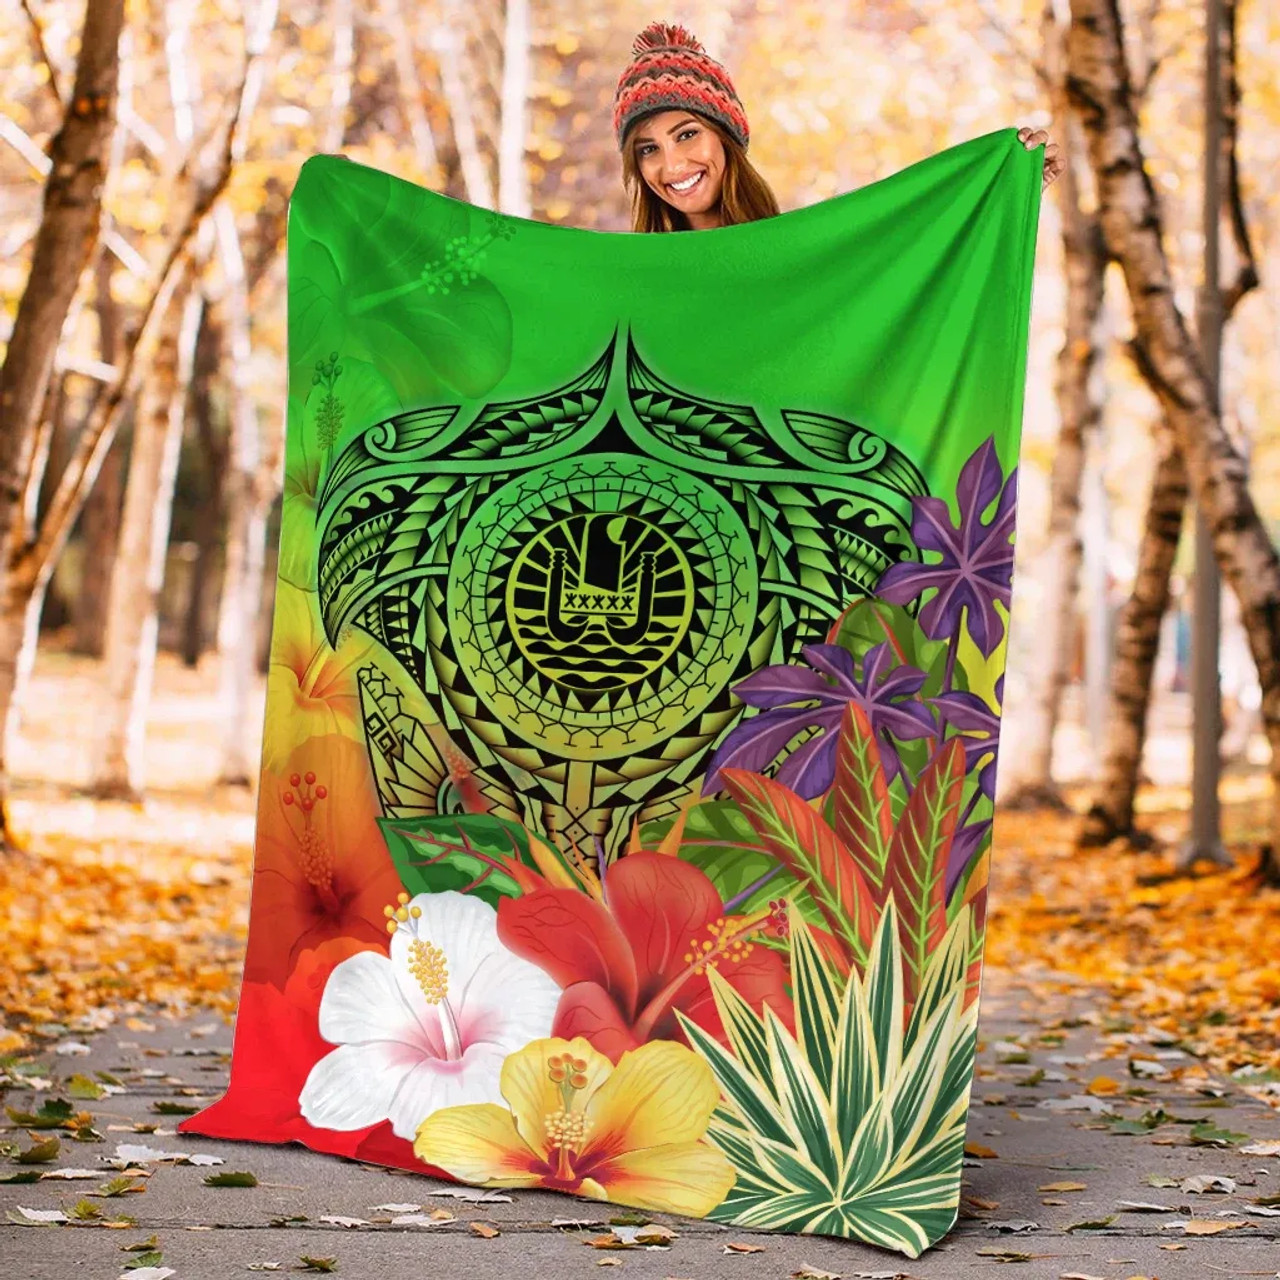 Tahiti Premium Blanket - Manta Ray Tropical Flowers (Green) 4